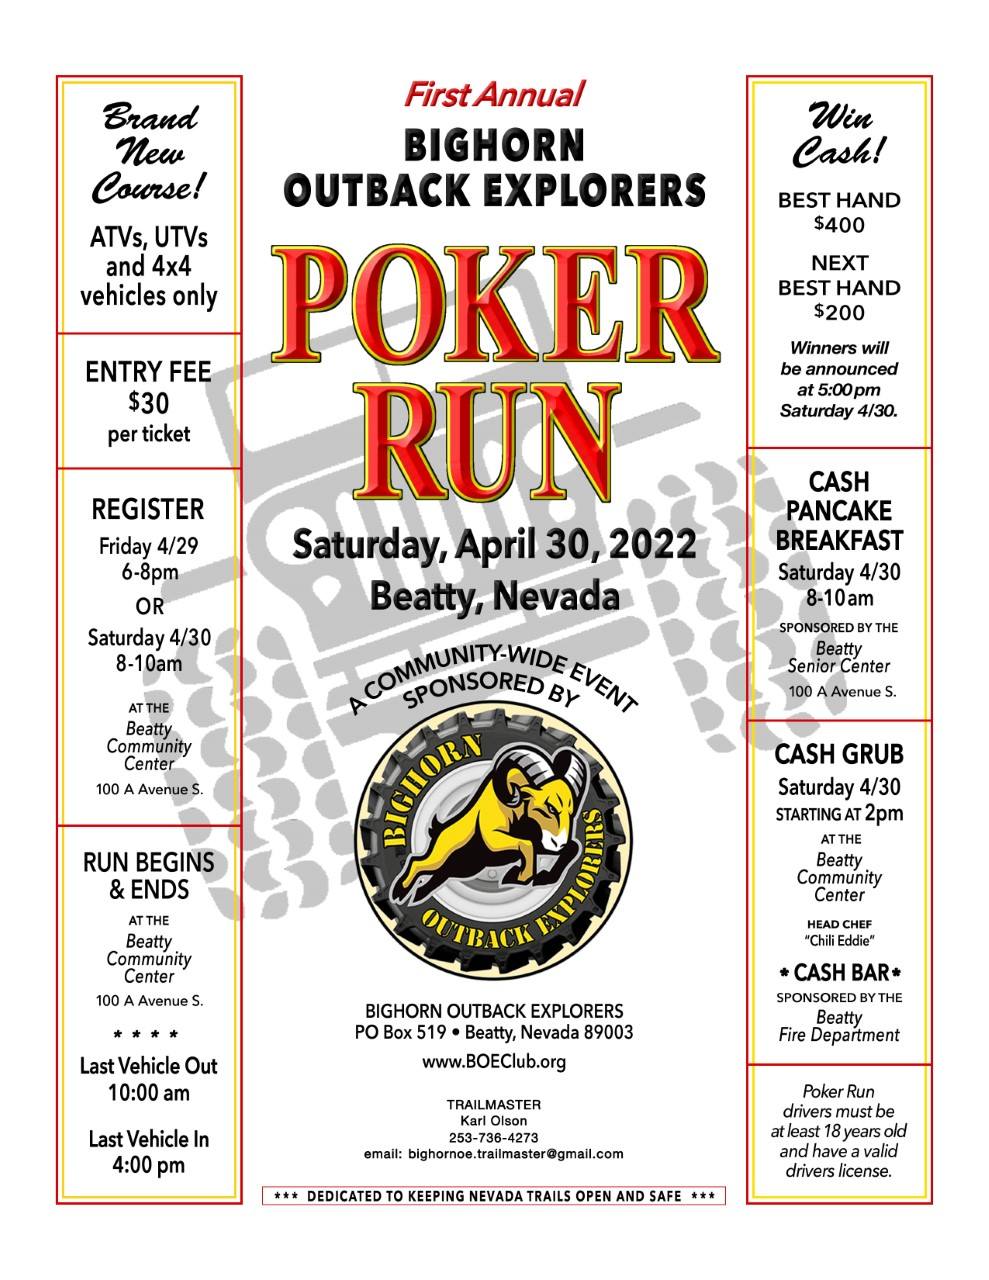 Bighorn Outback Explorers 1st Annual Poker Run 